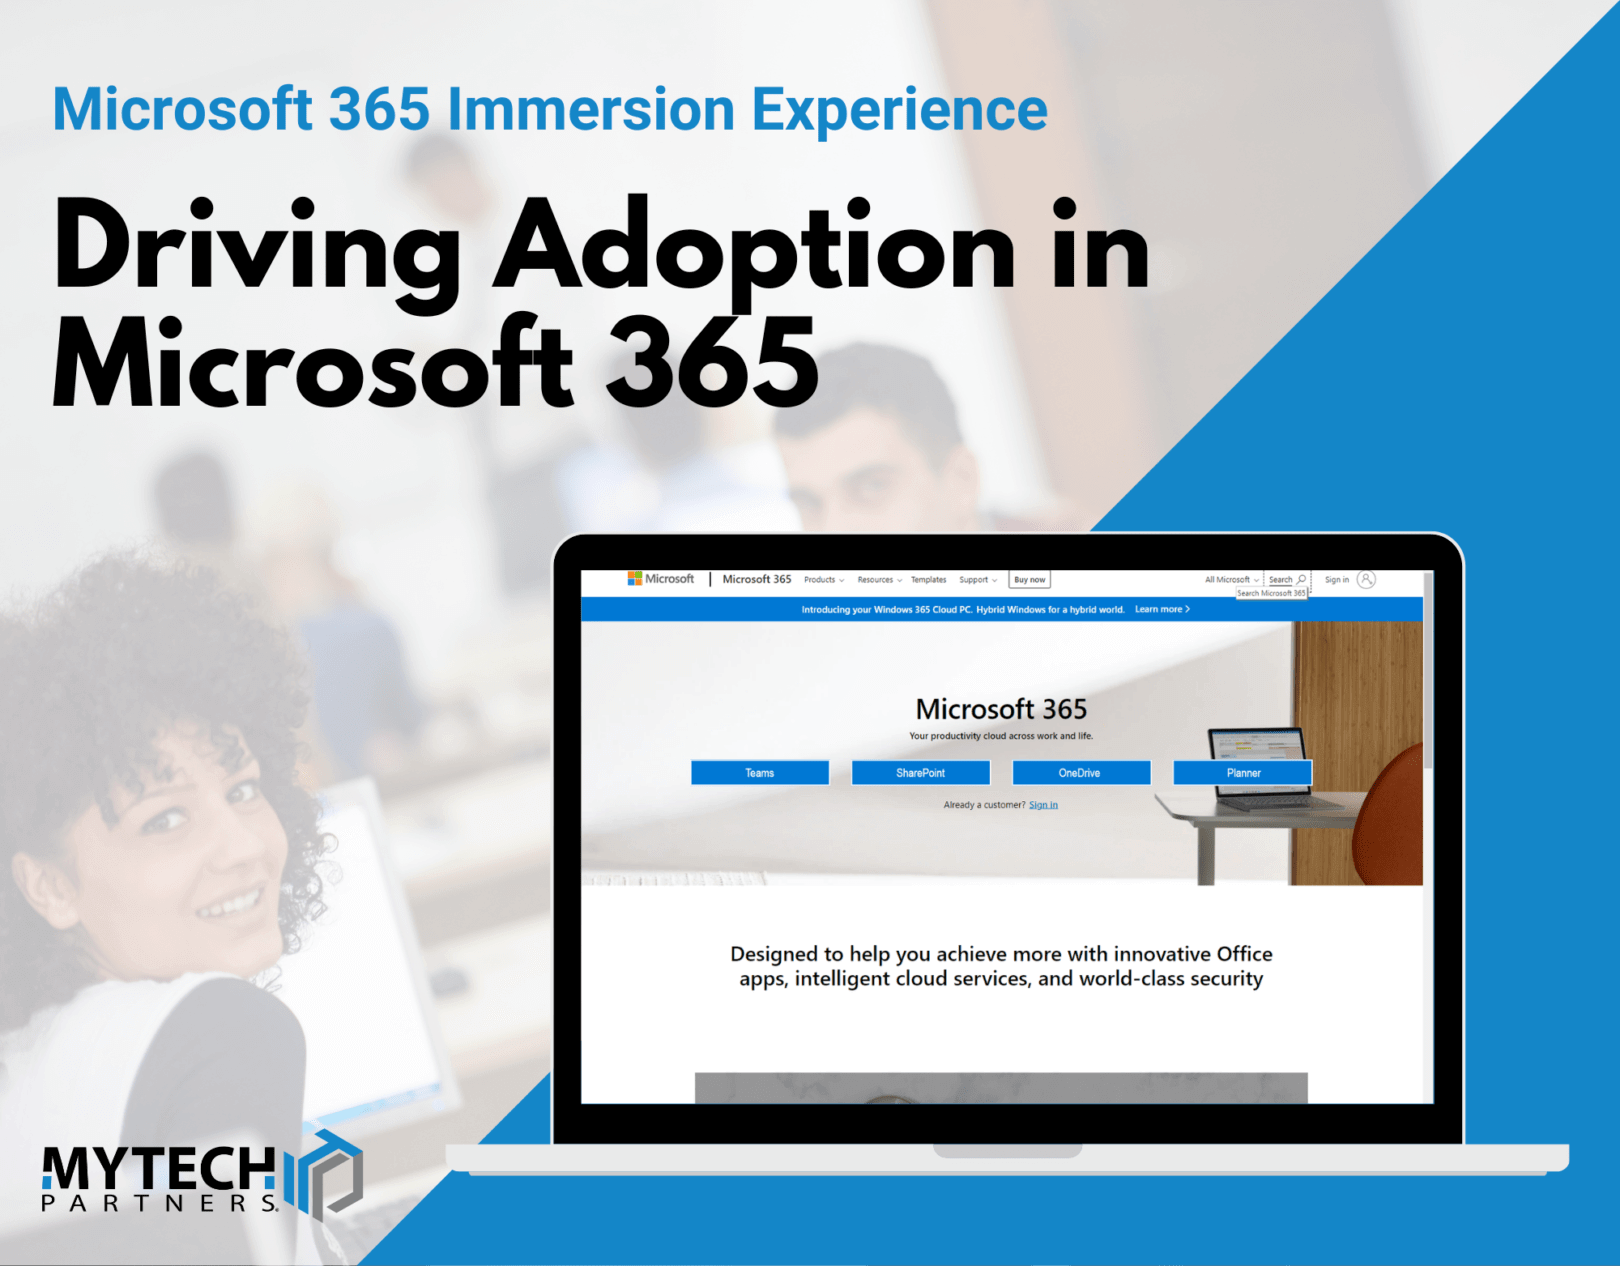 Graphic saying, "Driving Adoption in Microsoft 365"